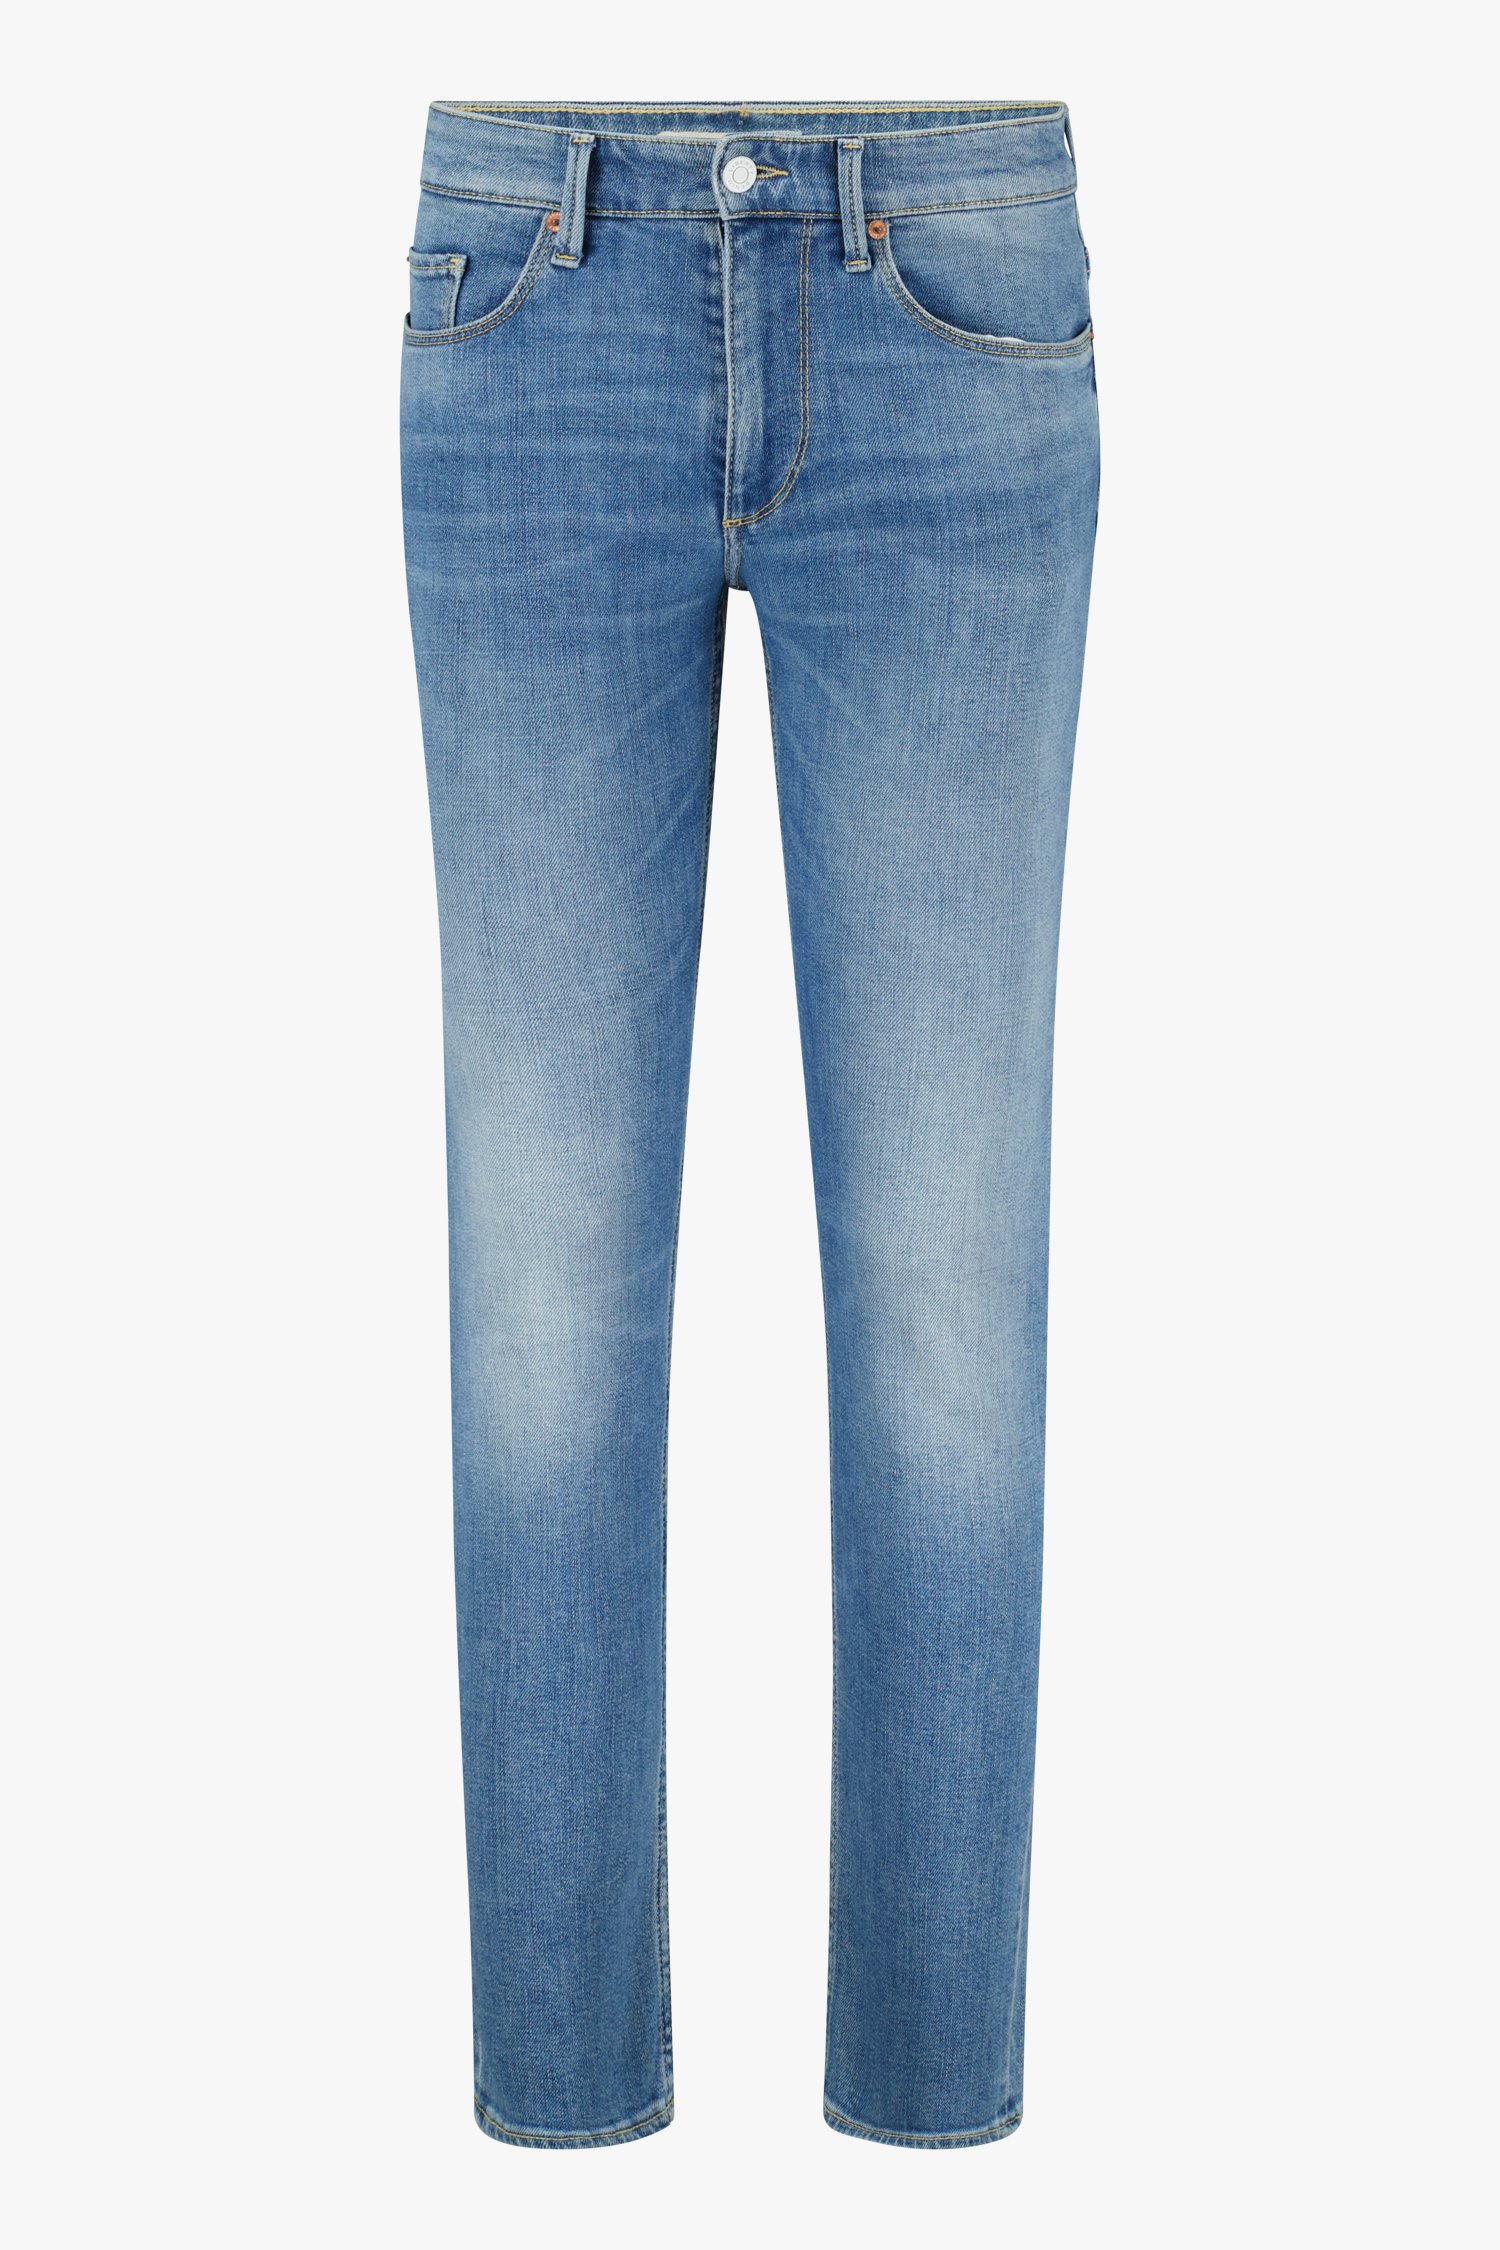 Jeans bleu moyen - Tim – slim fit- L32  de Liberty Island Denim pour Hommes